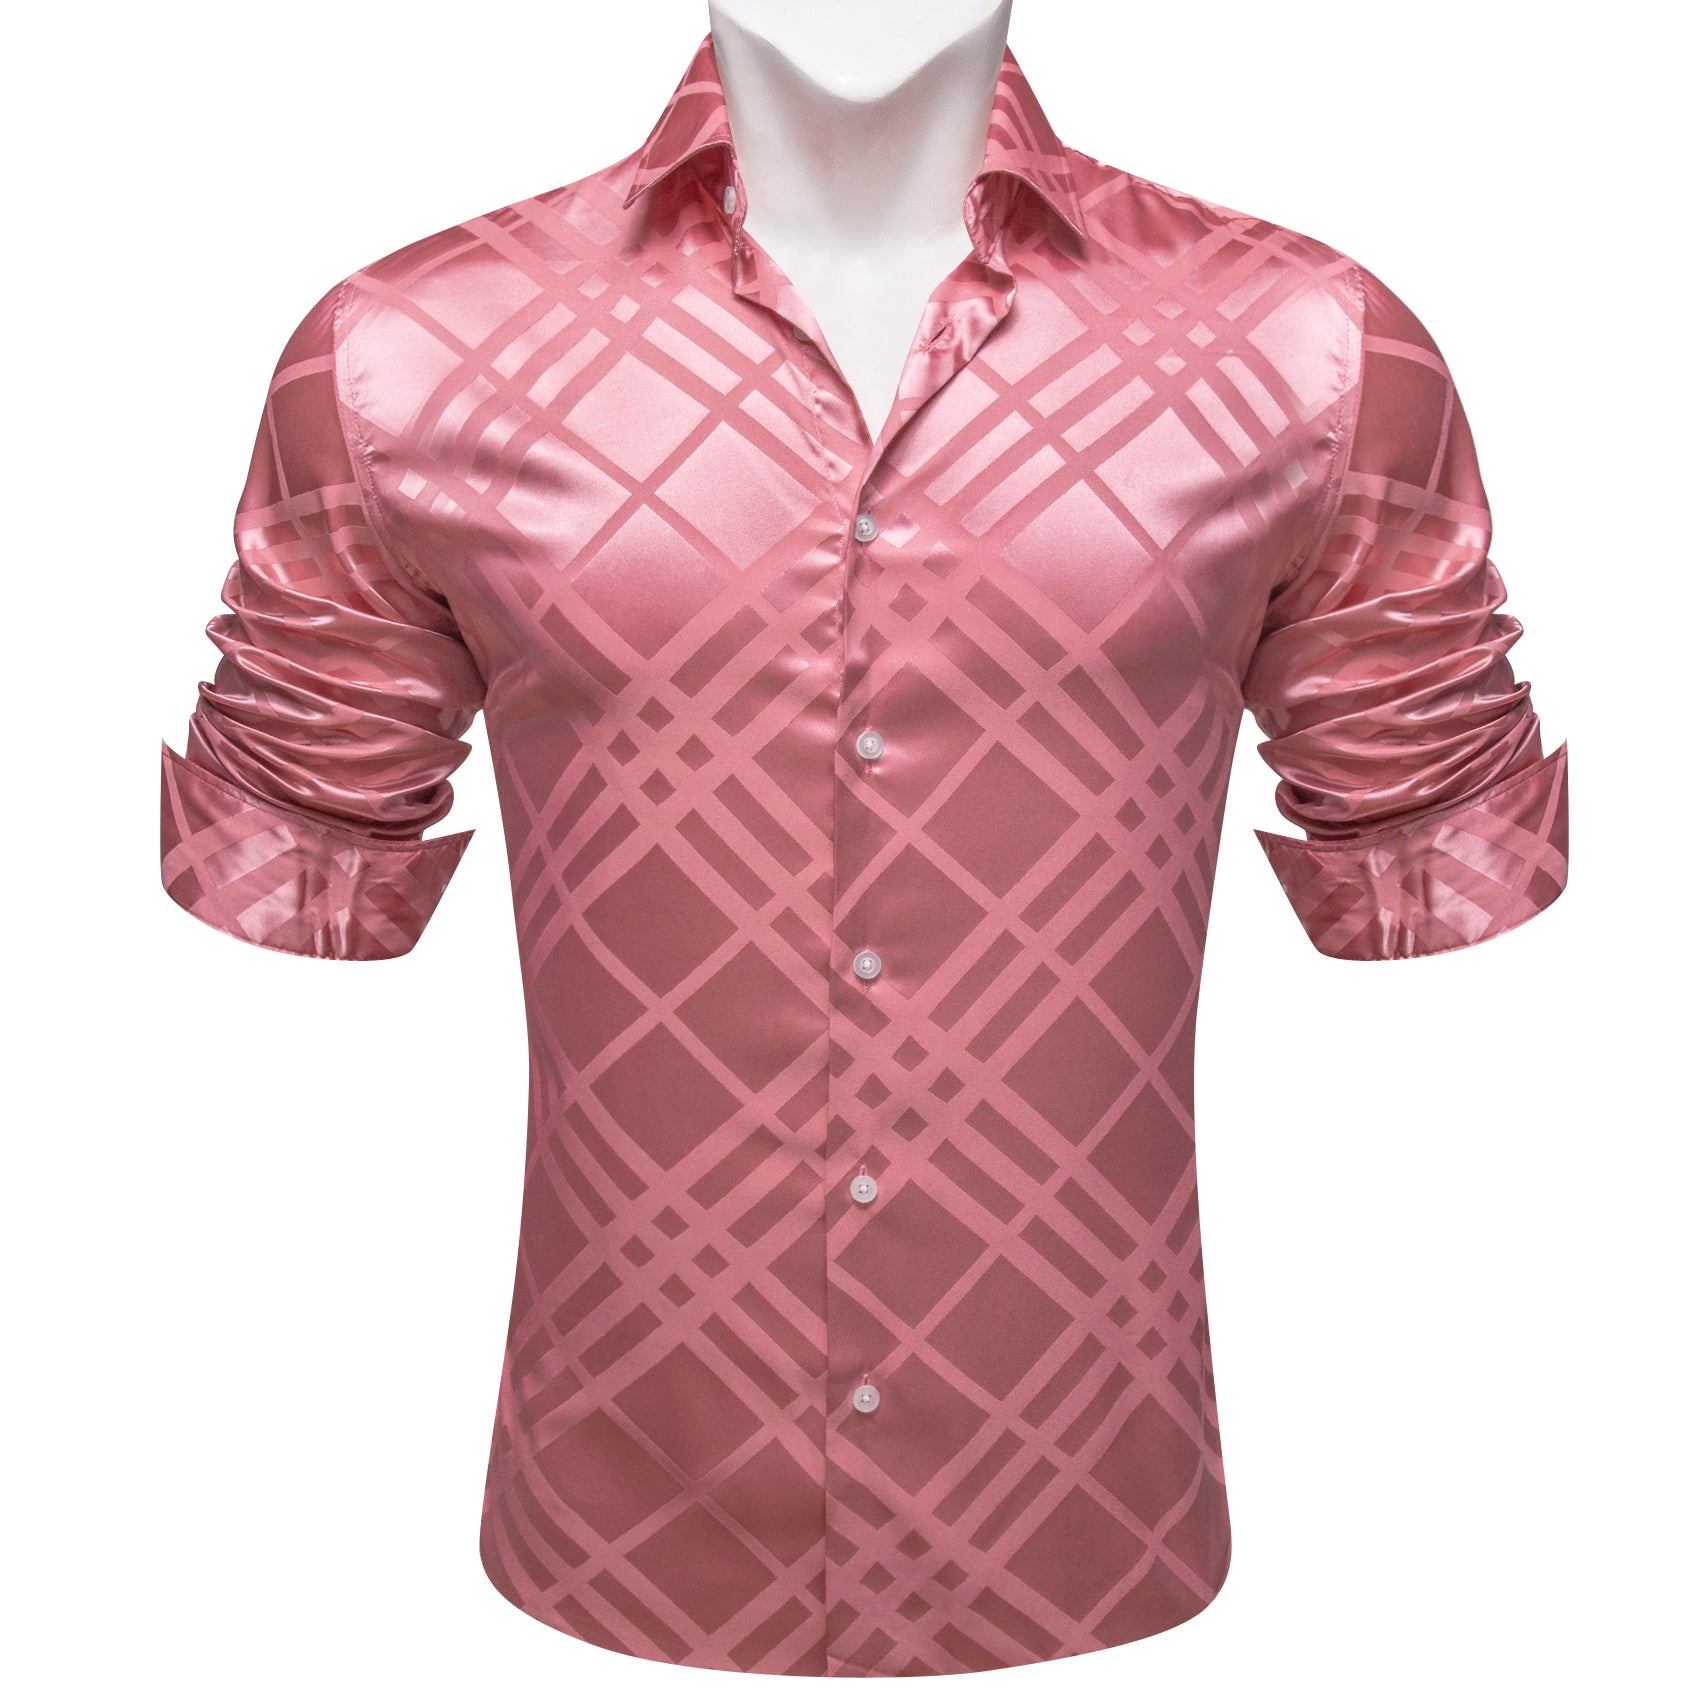 Barry.wang Button Down Shirt Pink Striped Silk Shirt for Mens Fashion